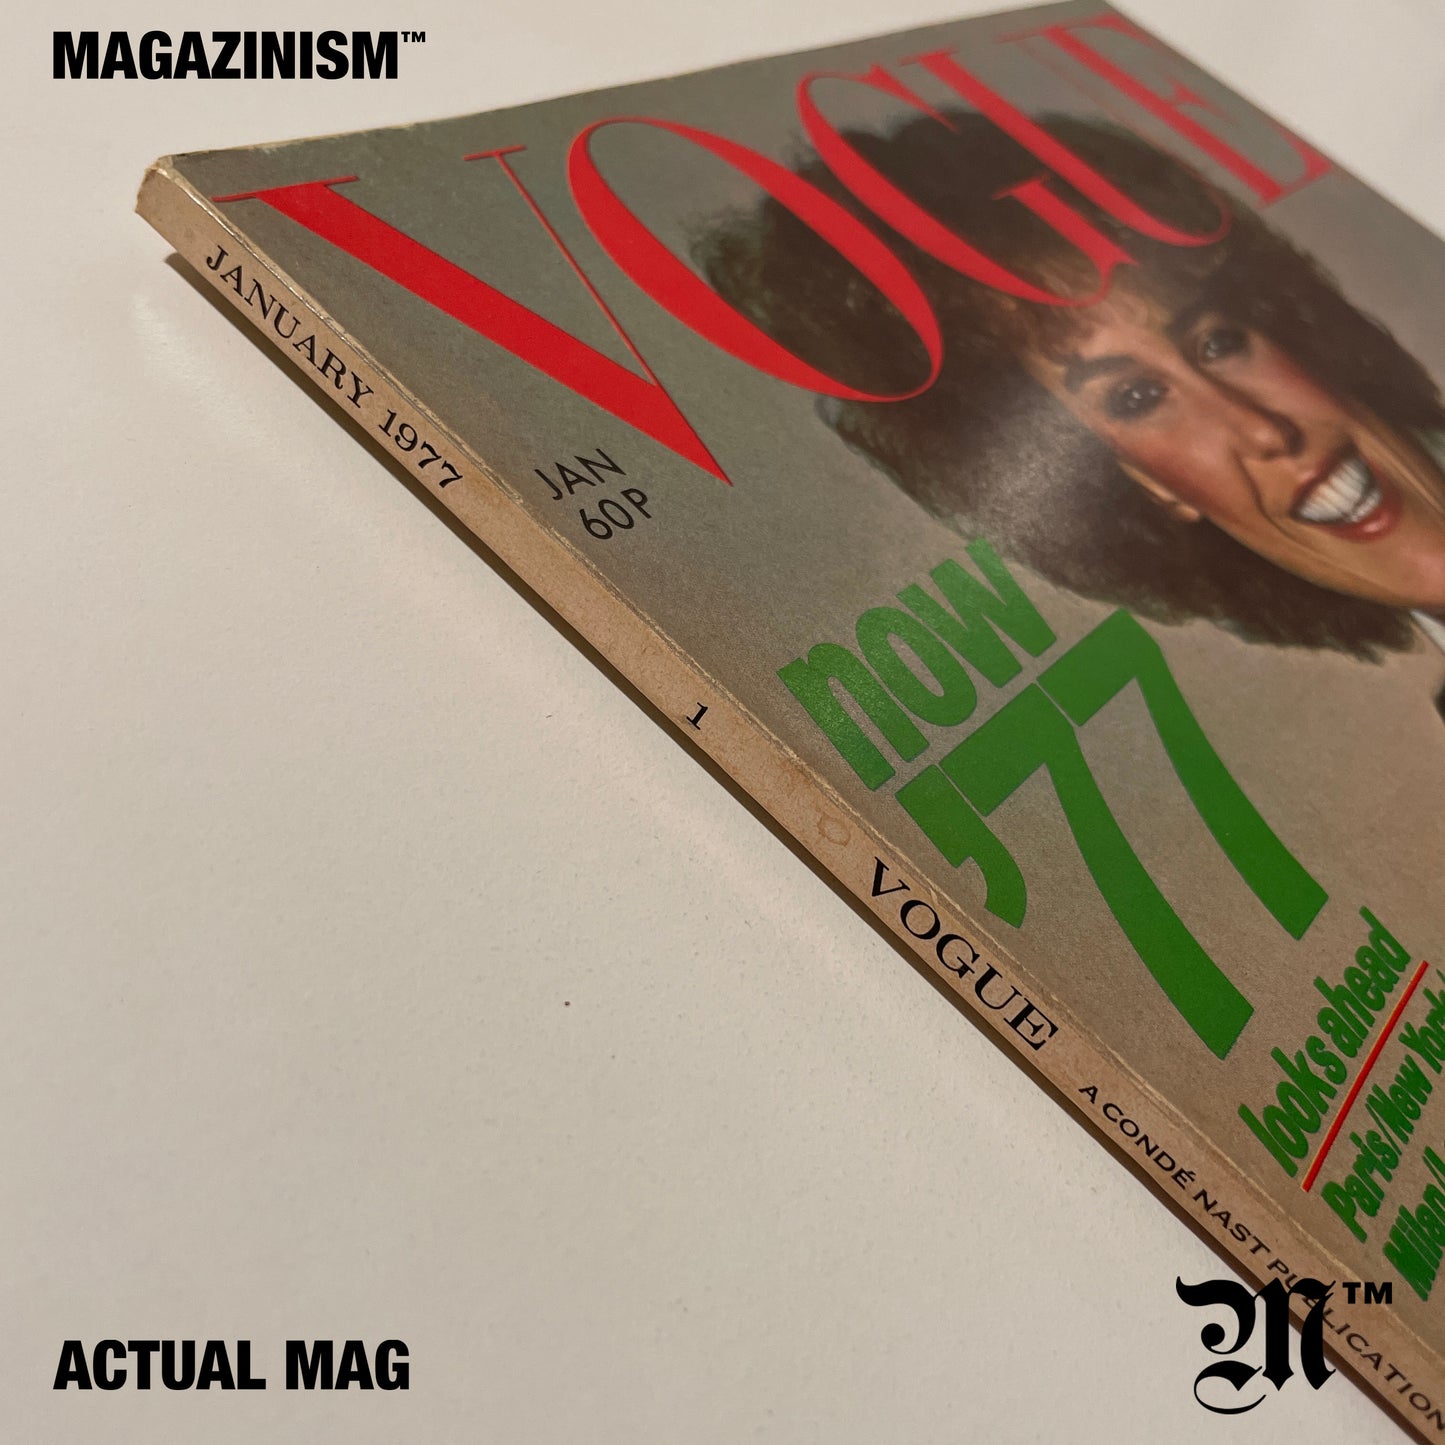 Vogue 1977 January